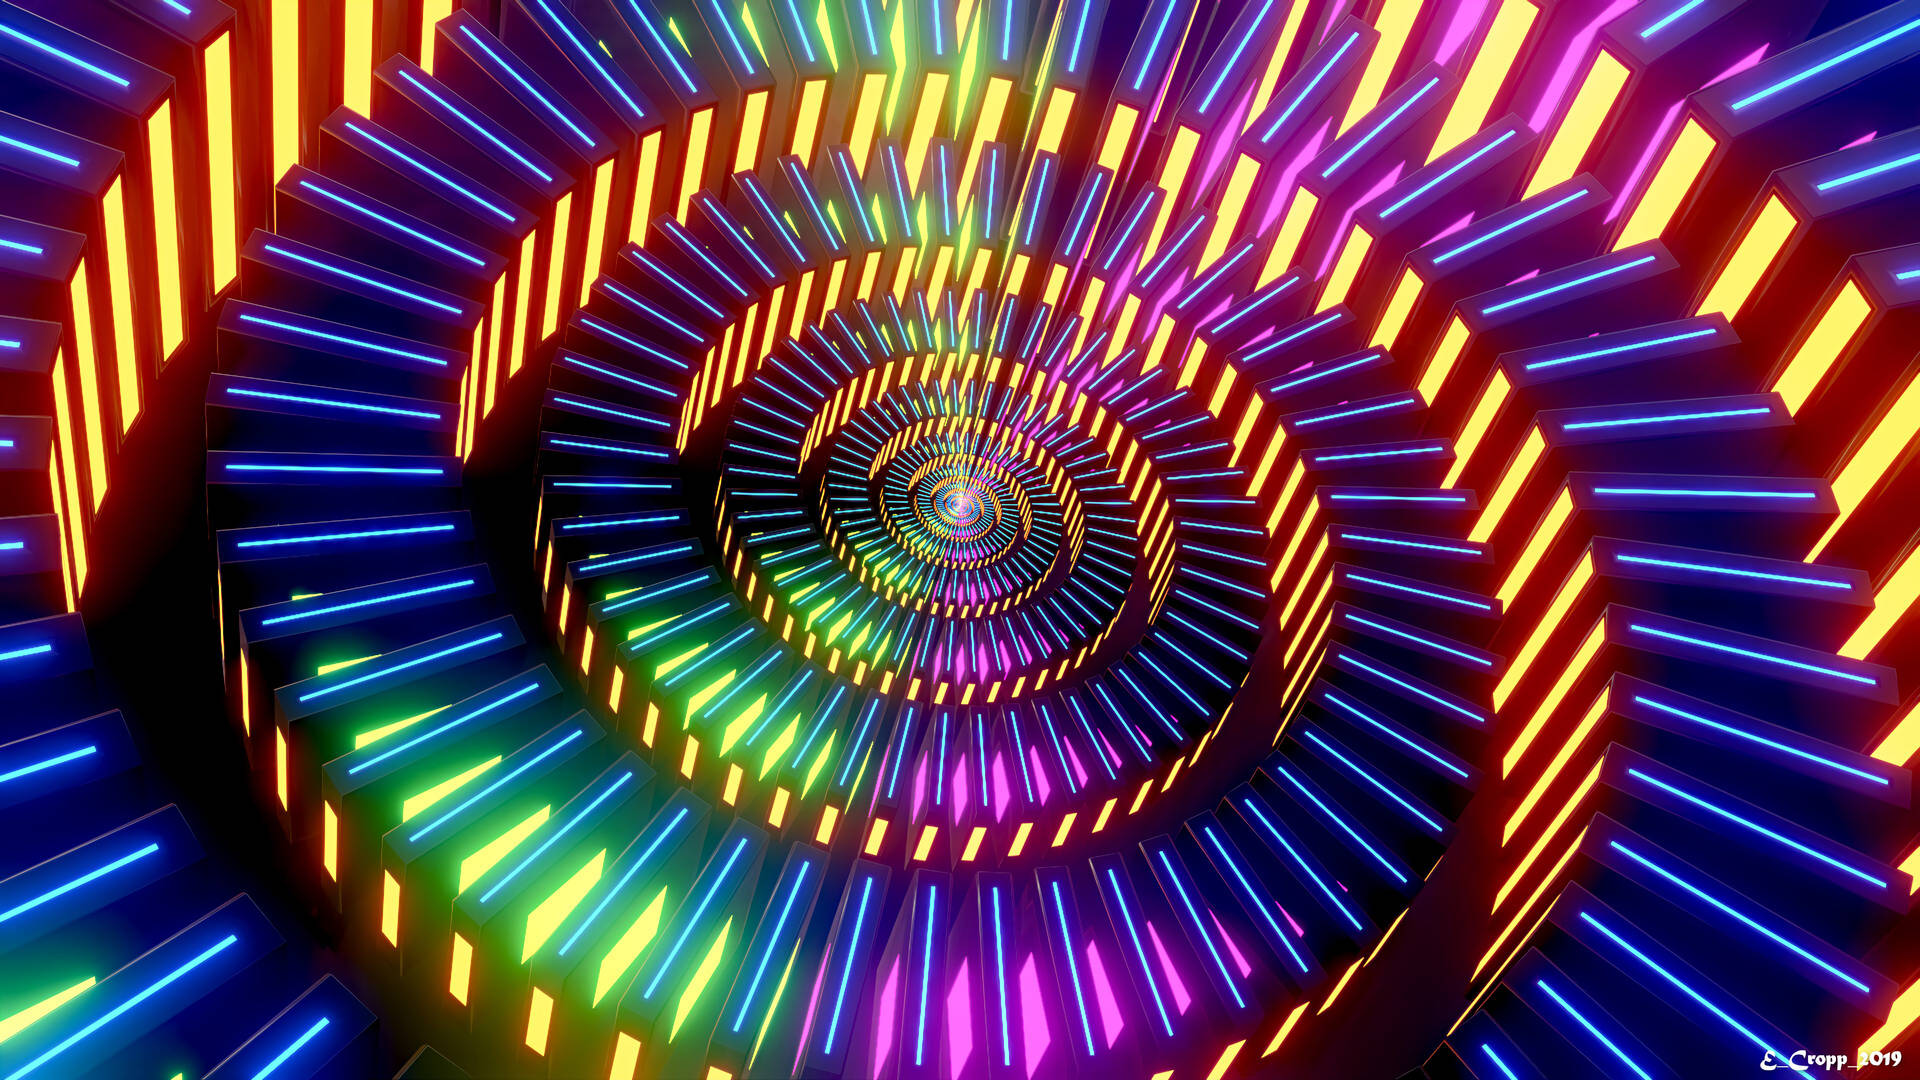 Abstract Glowing Spiral Art Wallpaper